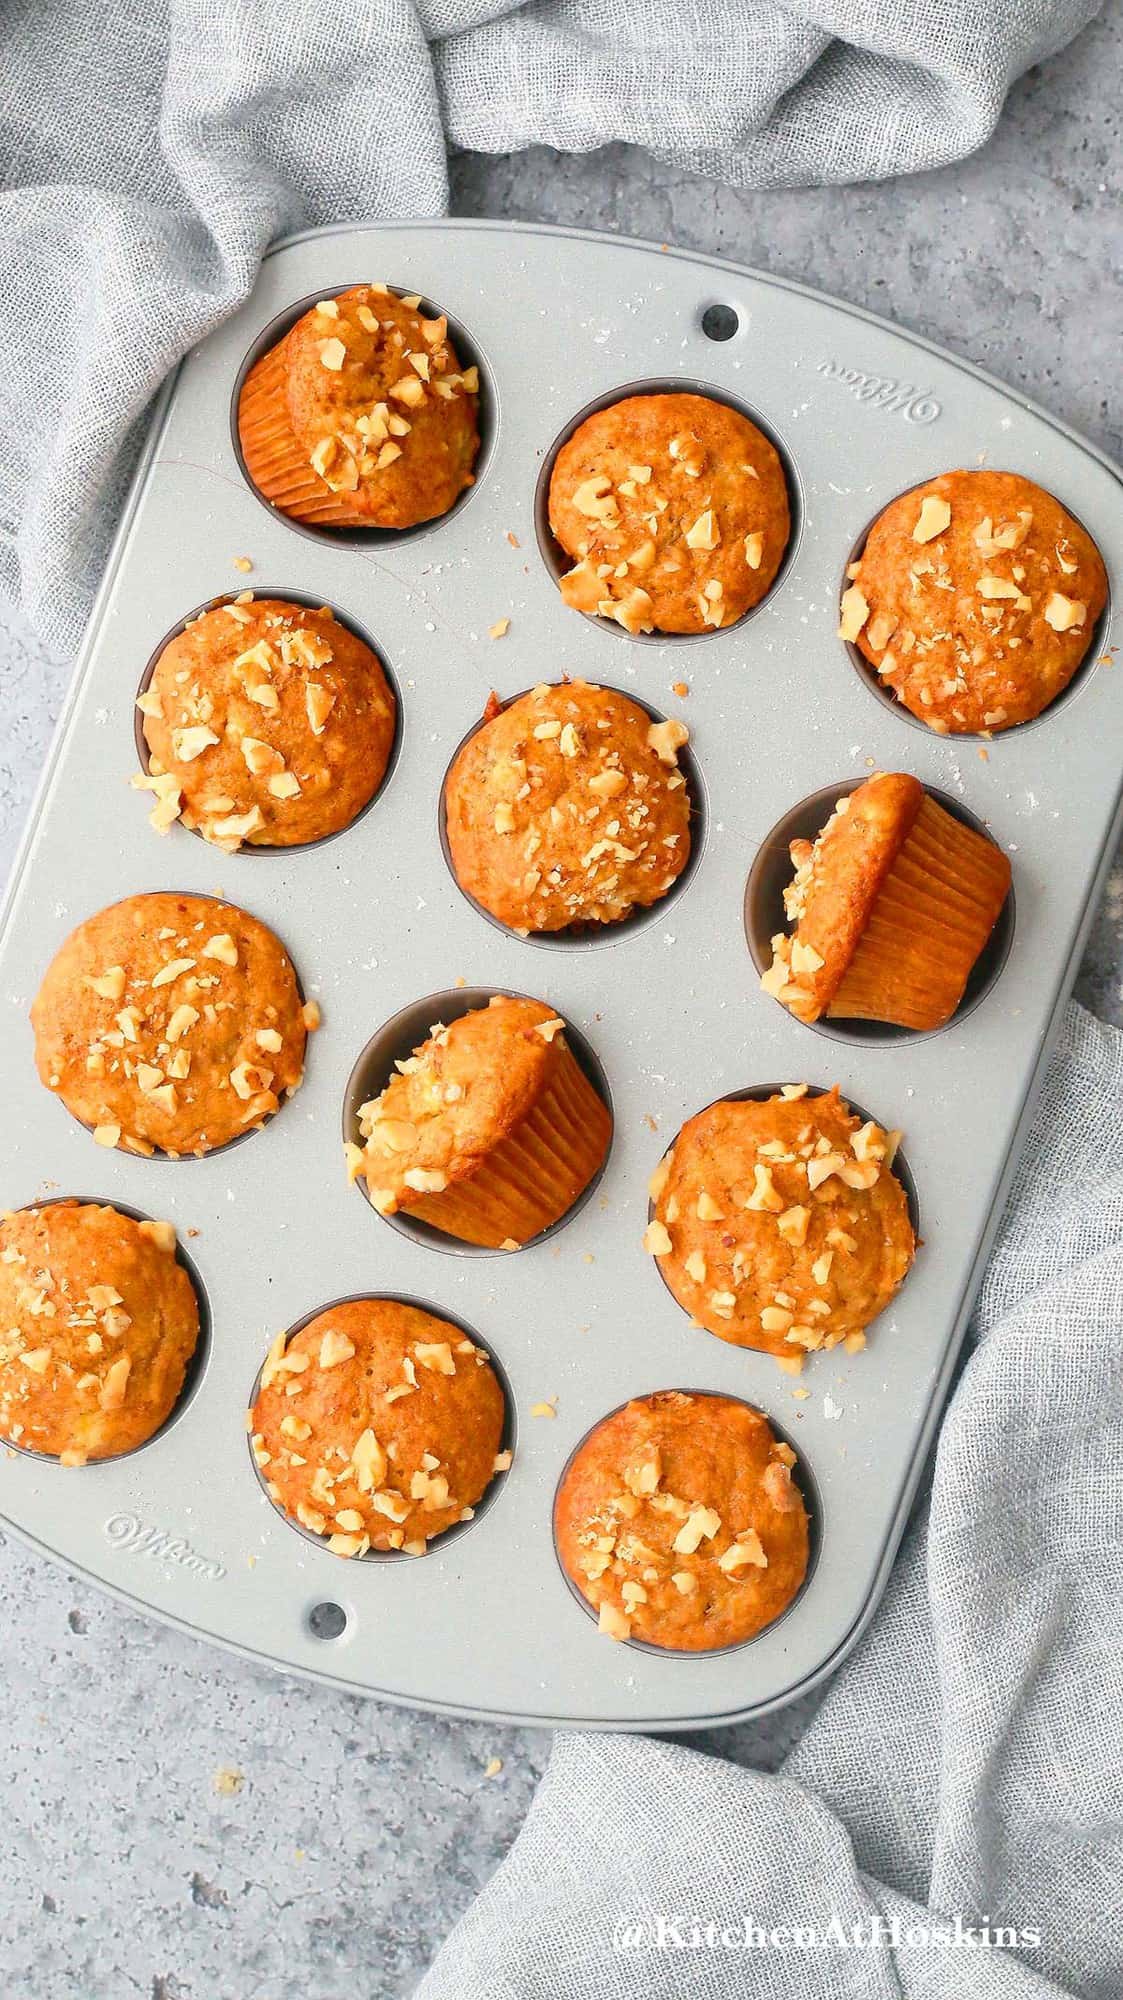 12-cavity Mini Muffin Pan - Whisk